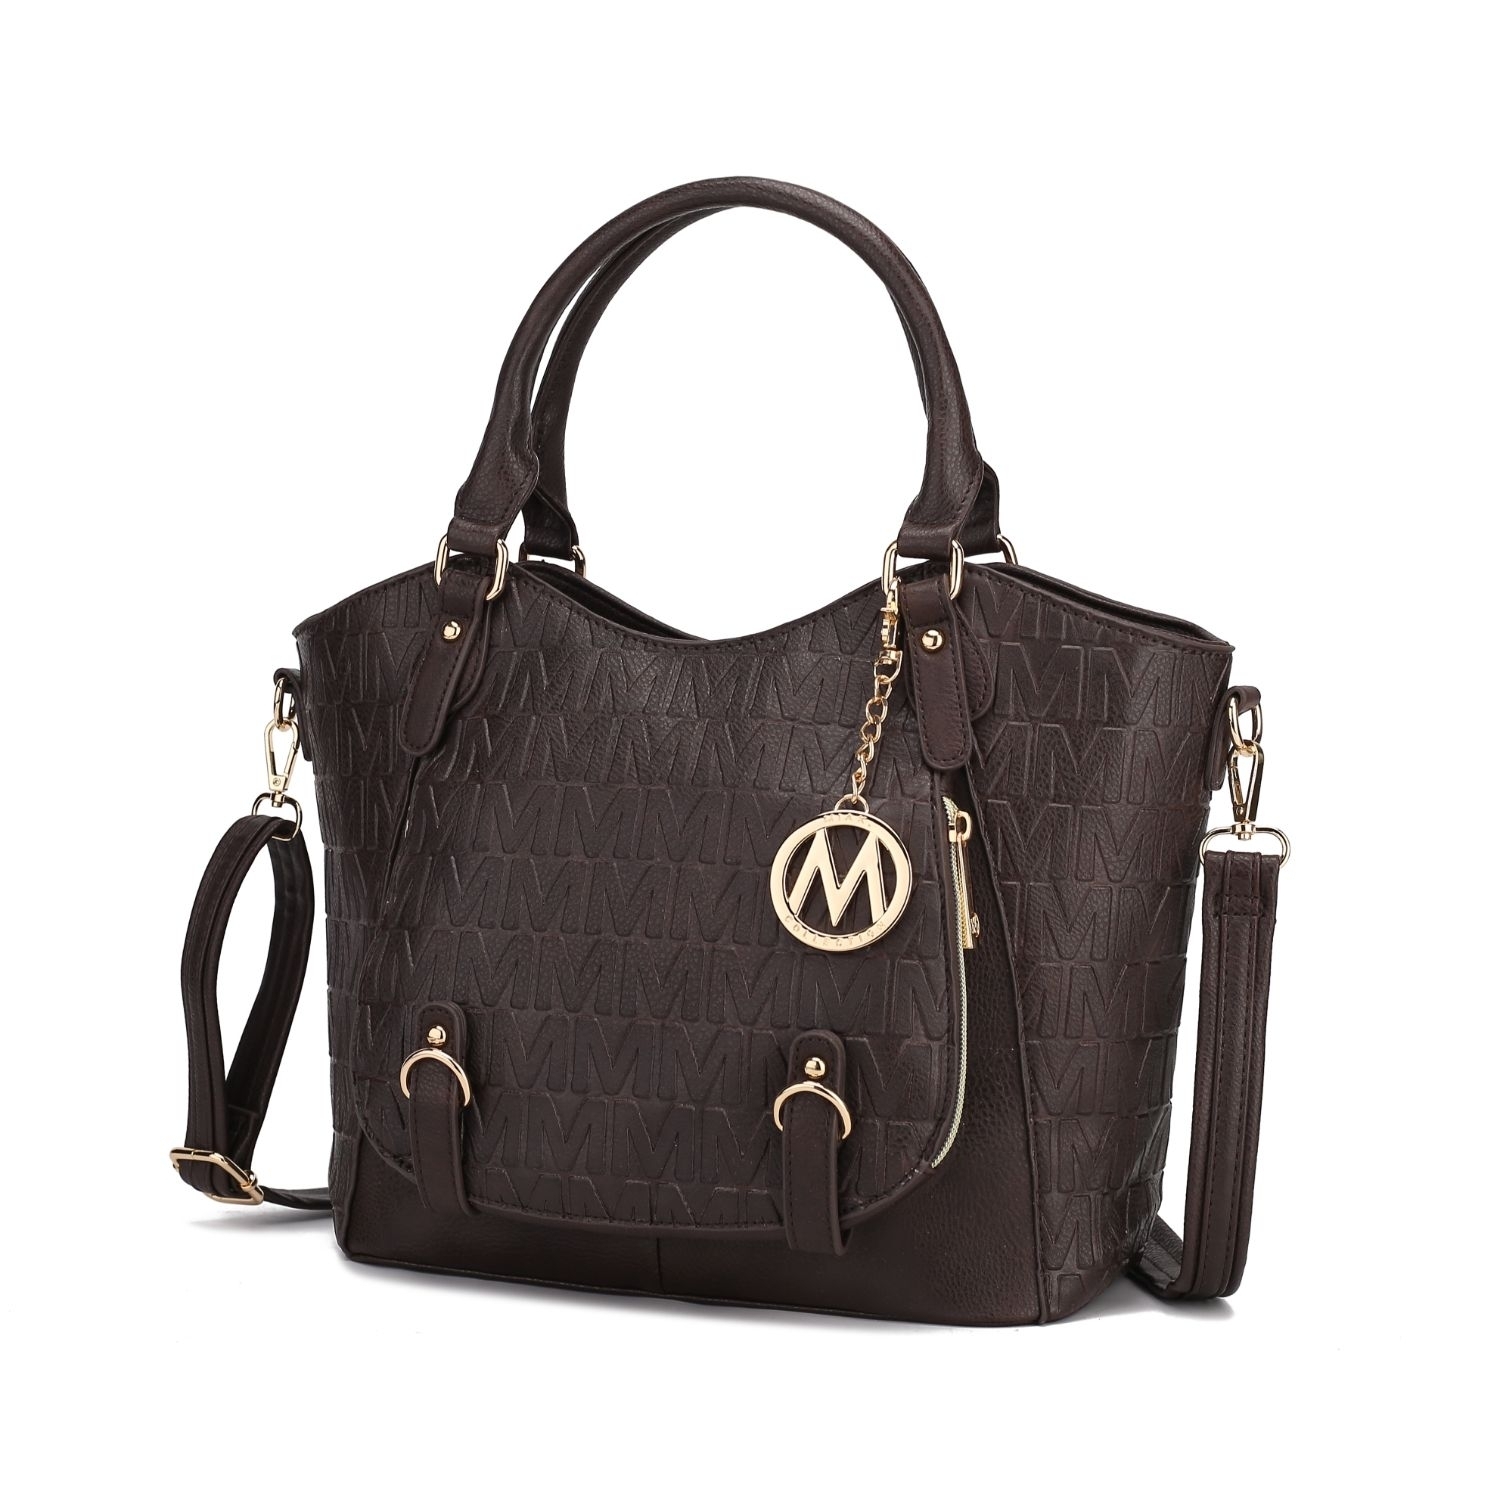 MKF Collection Melissa Tote Handbag By Mia K. - Chocolate